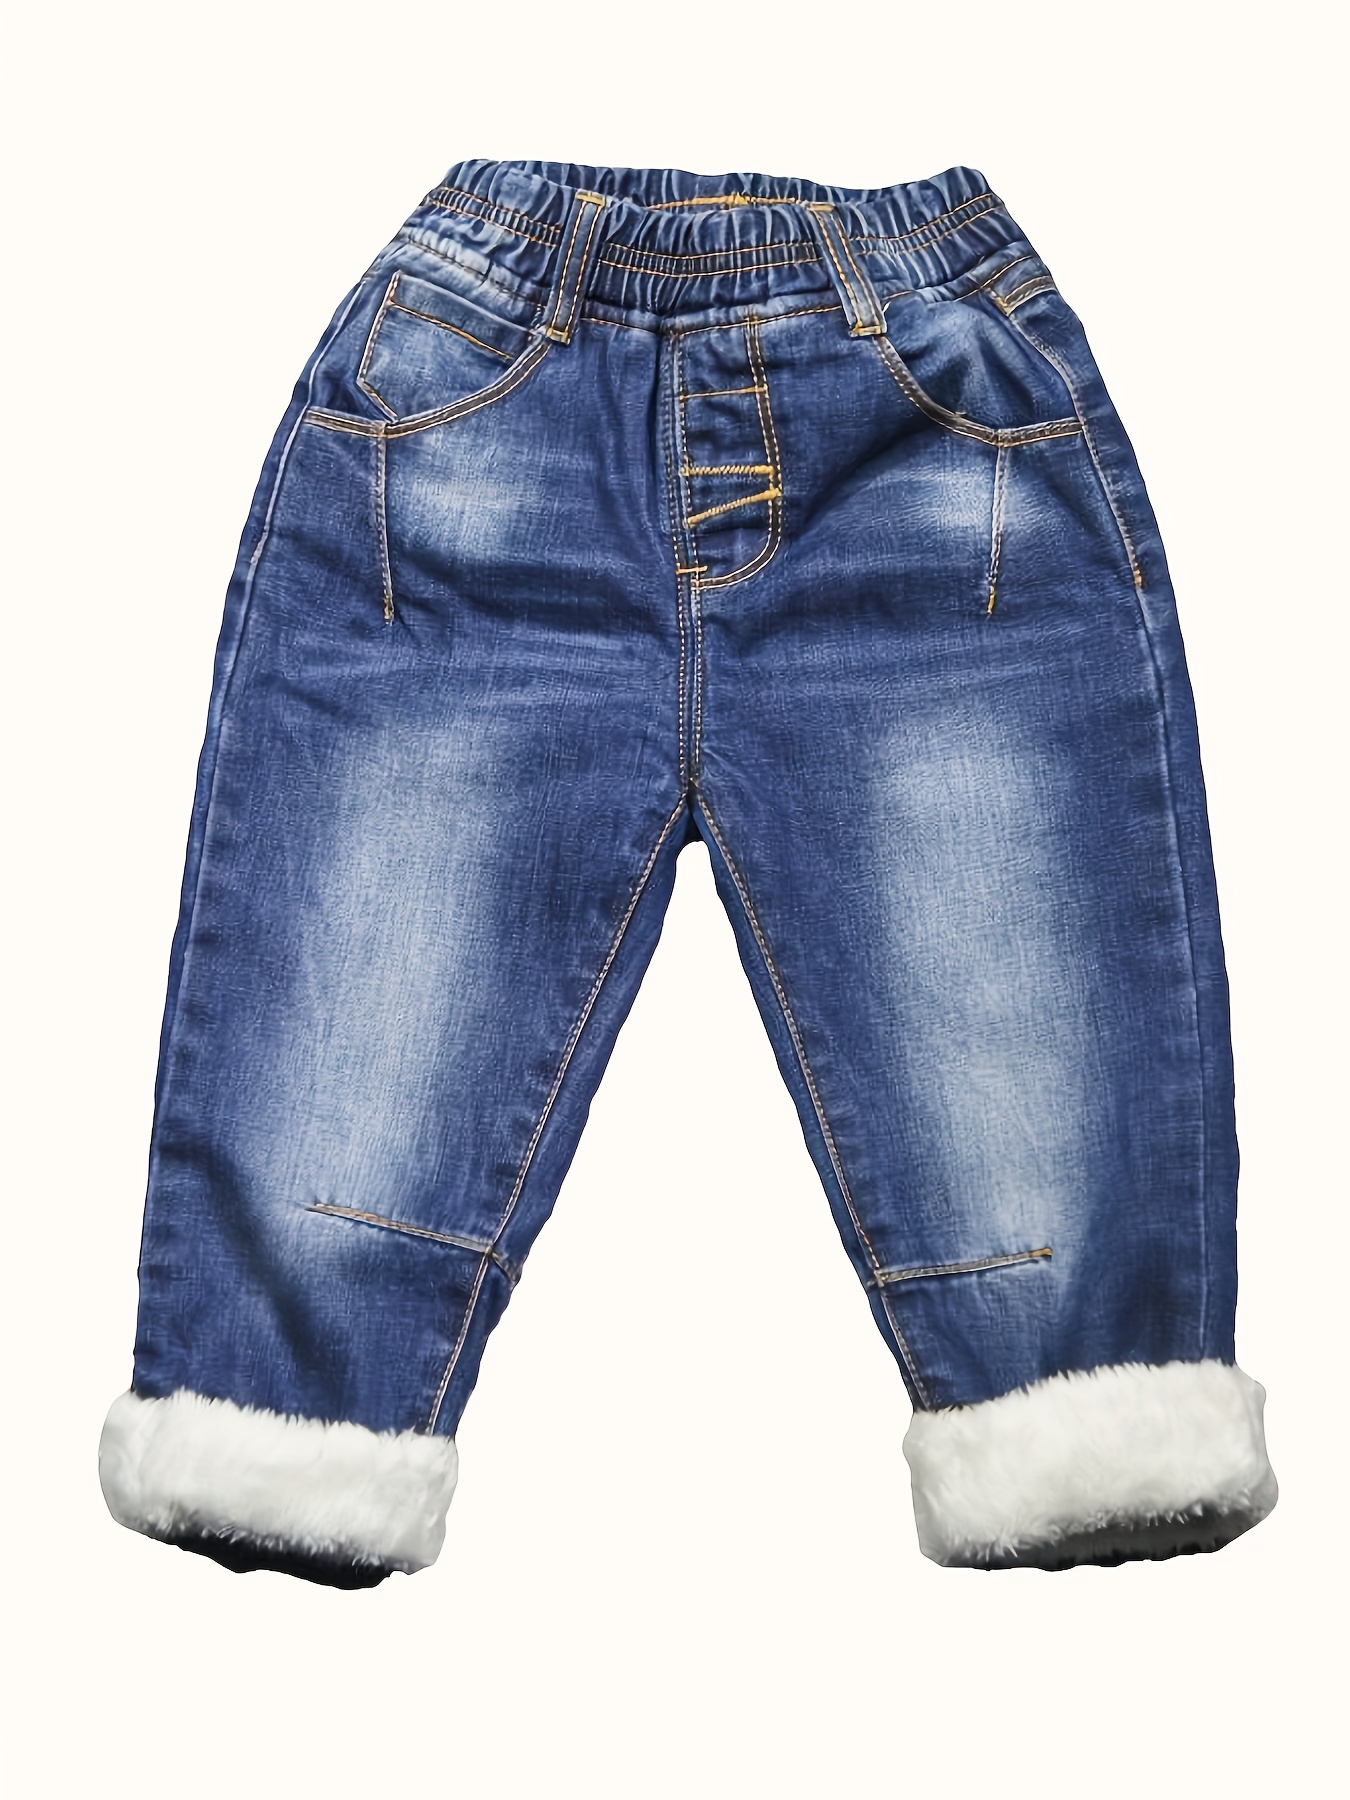 Winter Clothes Boy Jeans Pants, Jeans Fleece Winter Boy